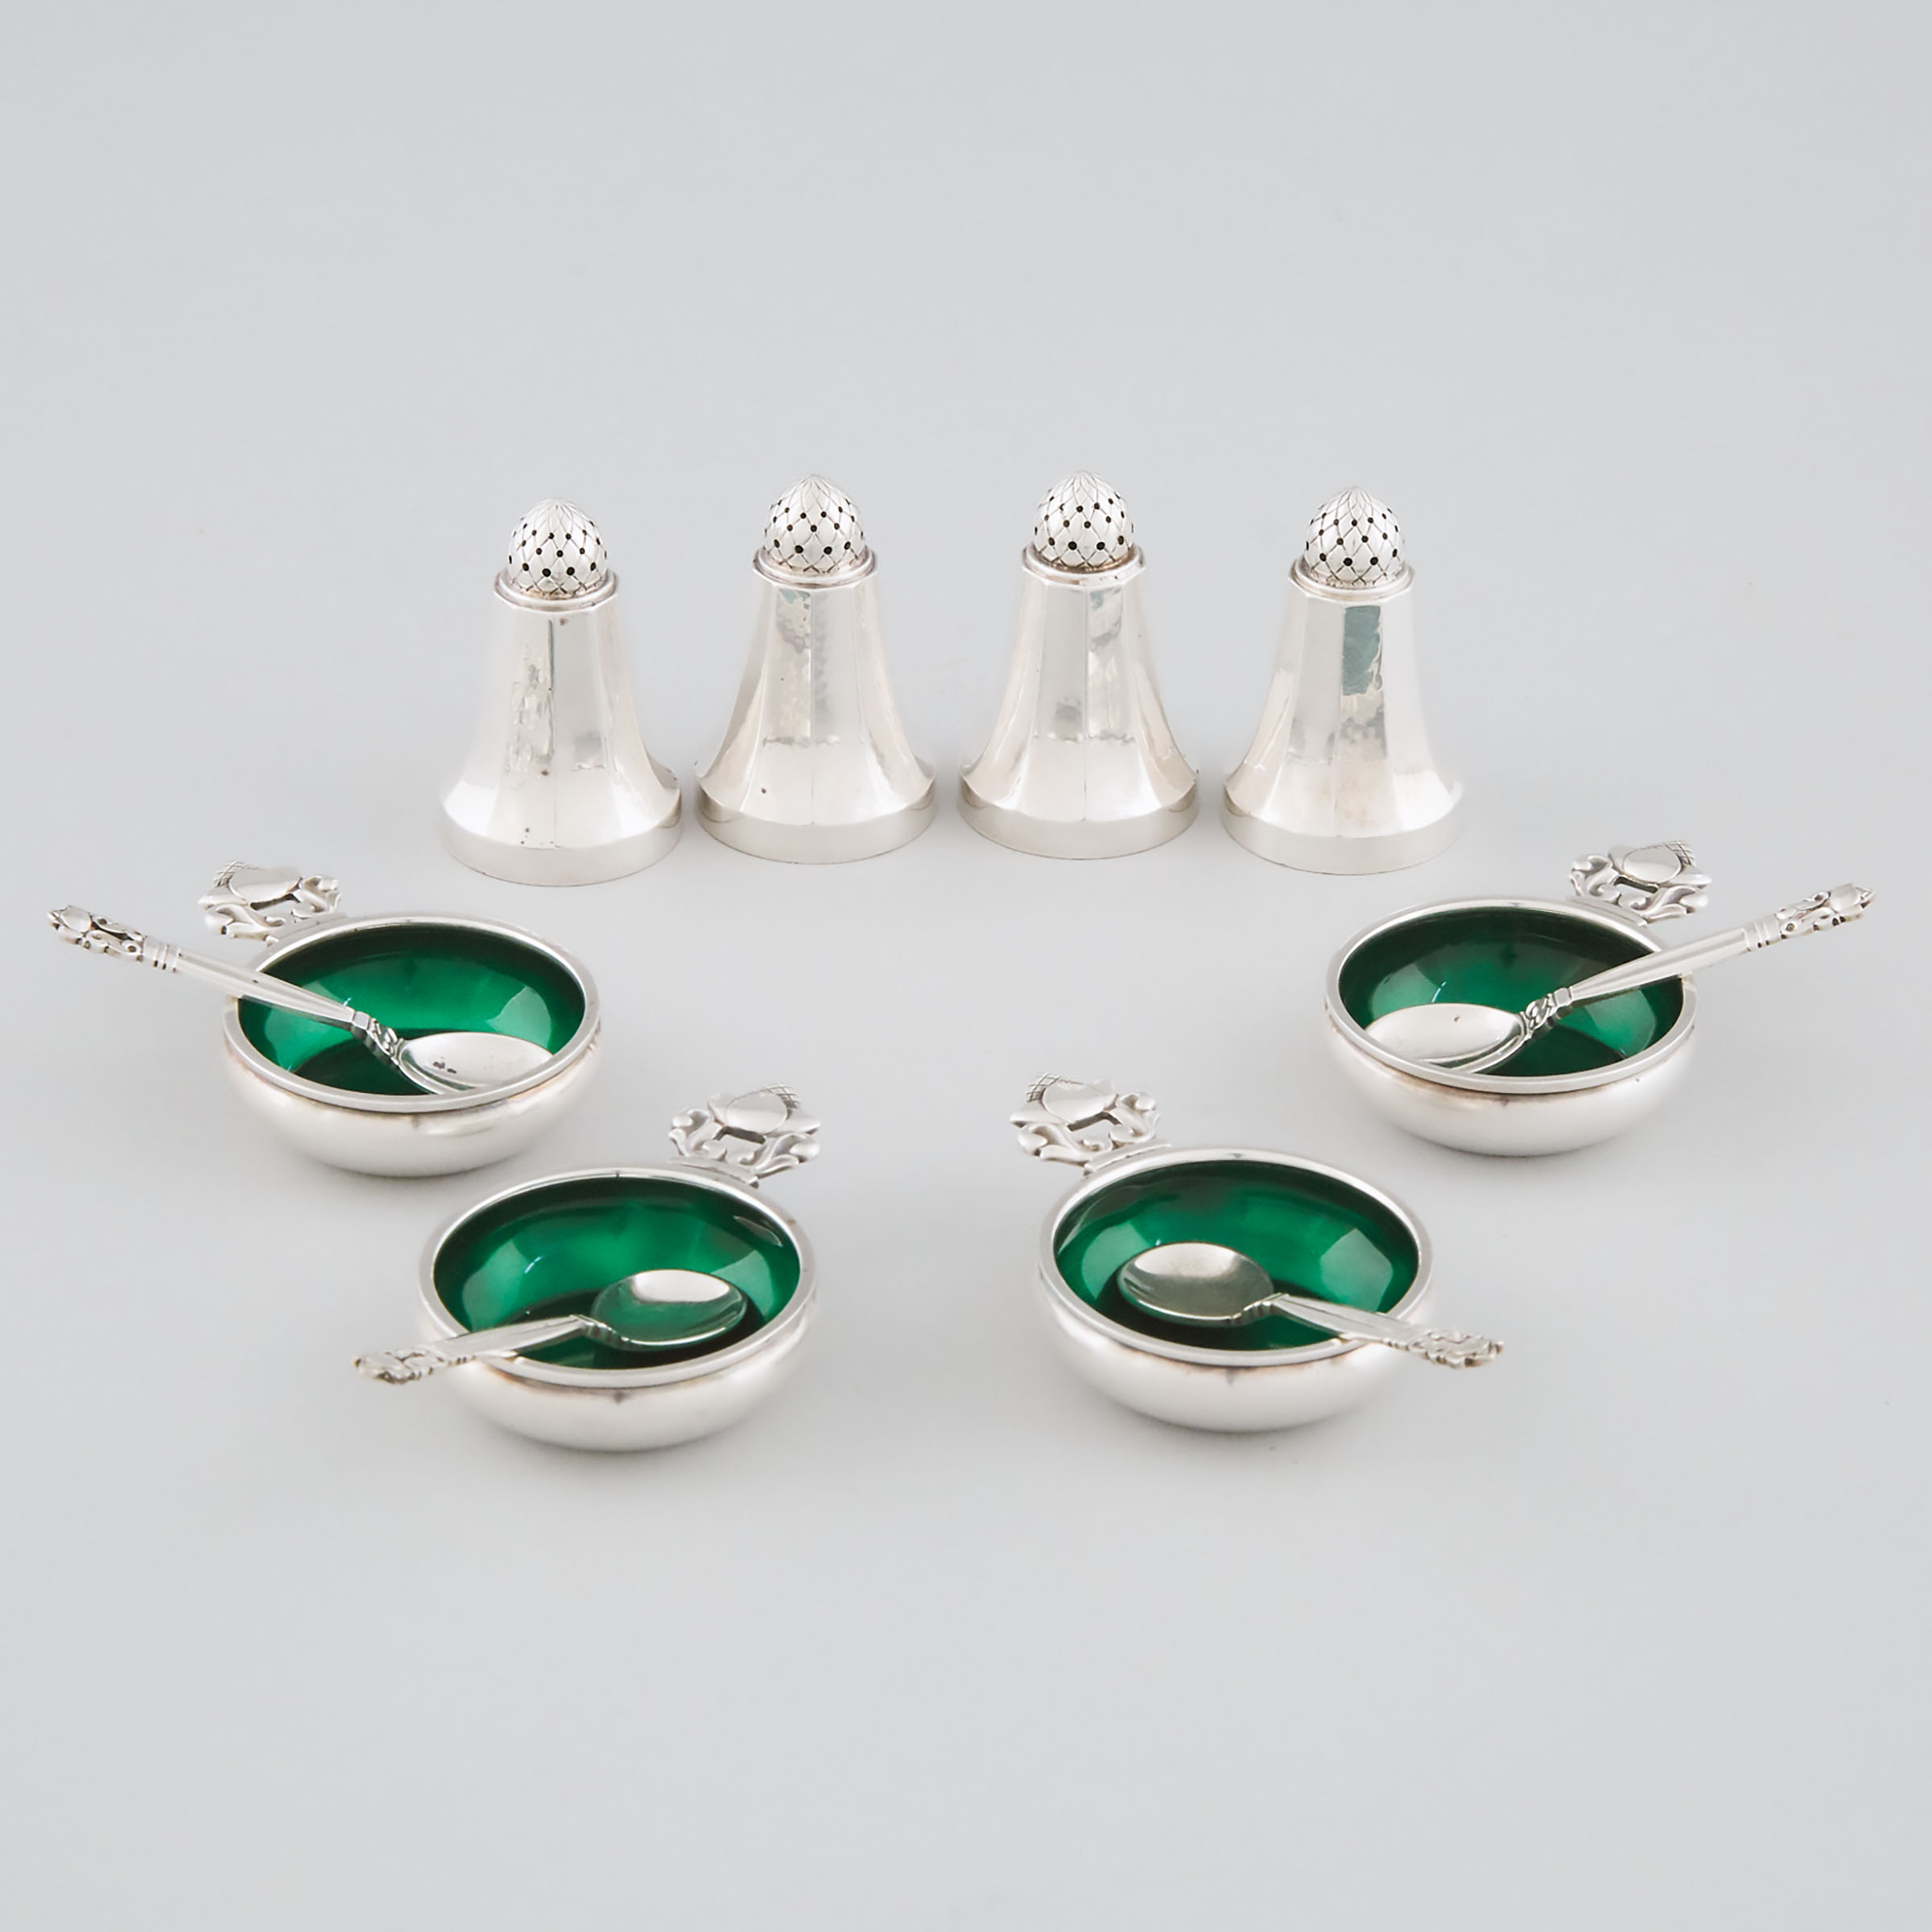 Danish Silver 'Acorn' Pattern Condiment Set, Johan Rohde for Georg Jensen, Copenhagen, 20th century